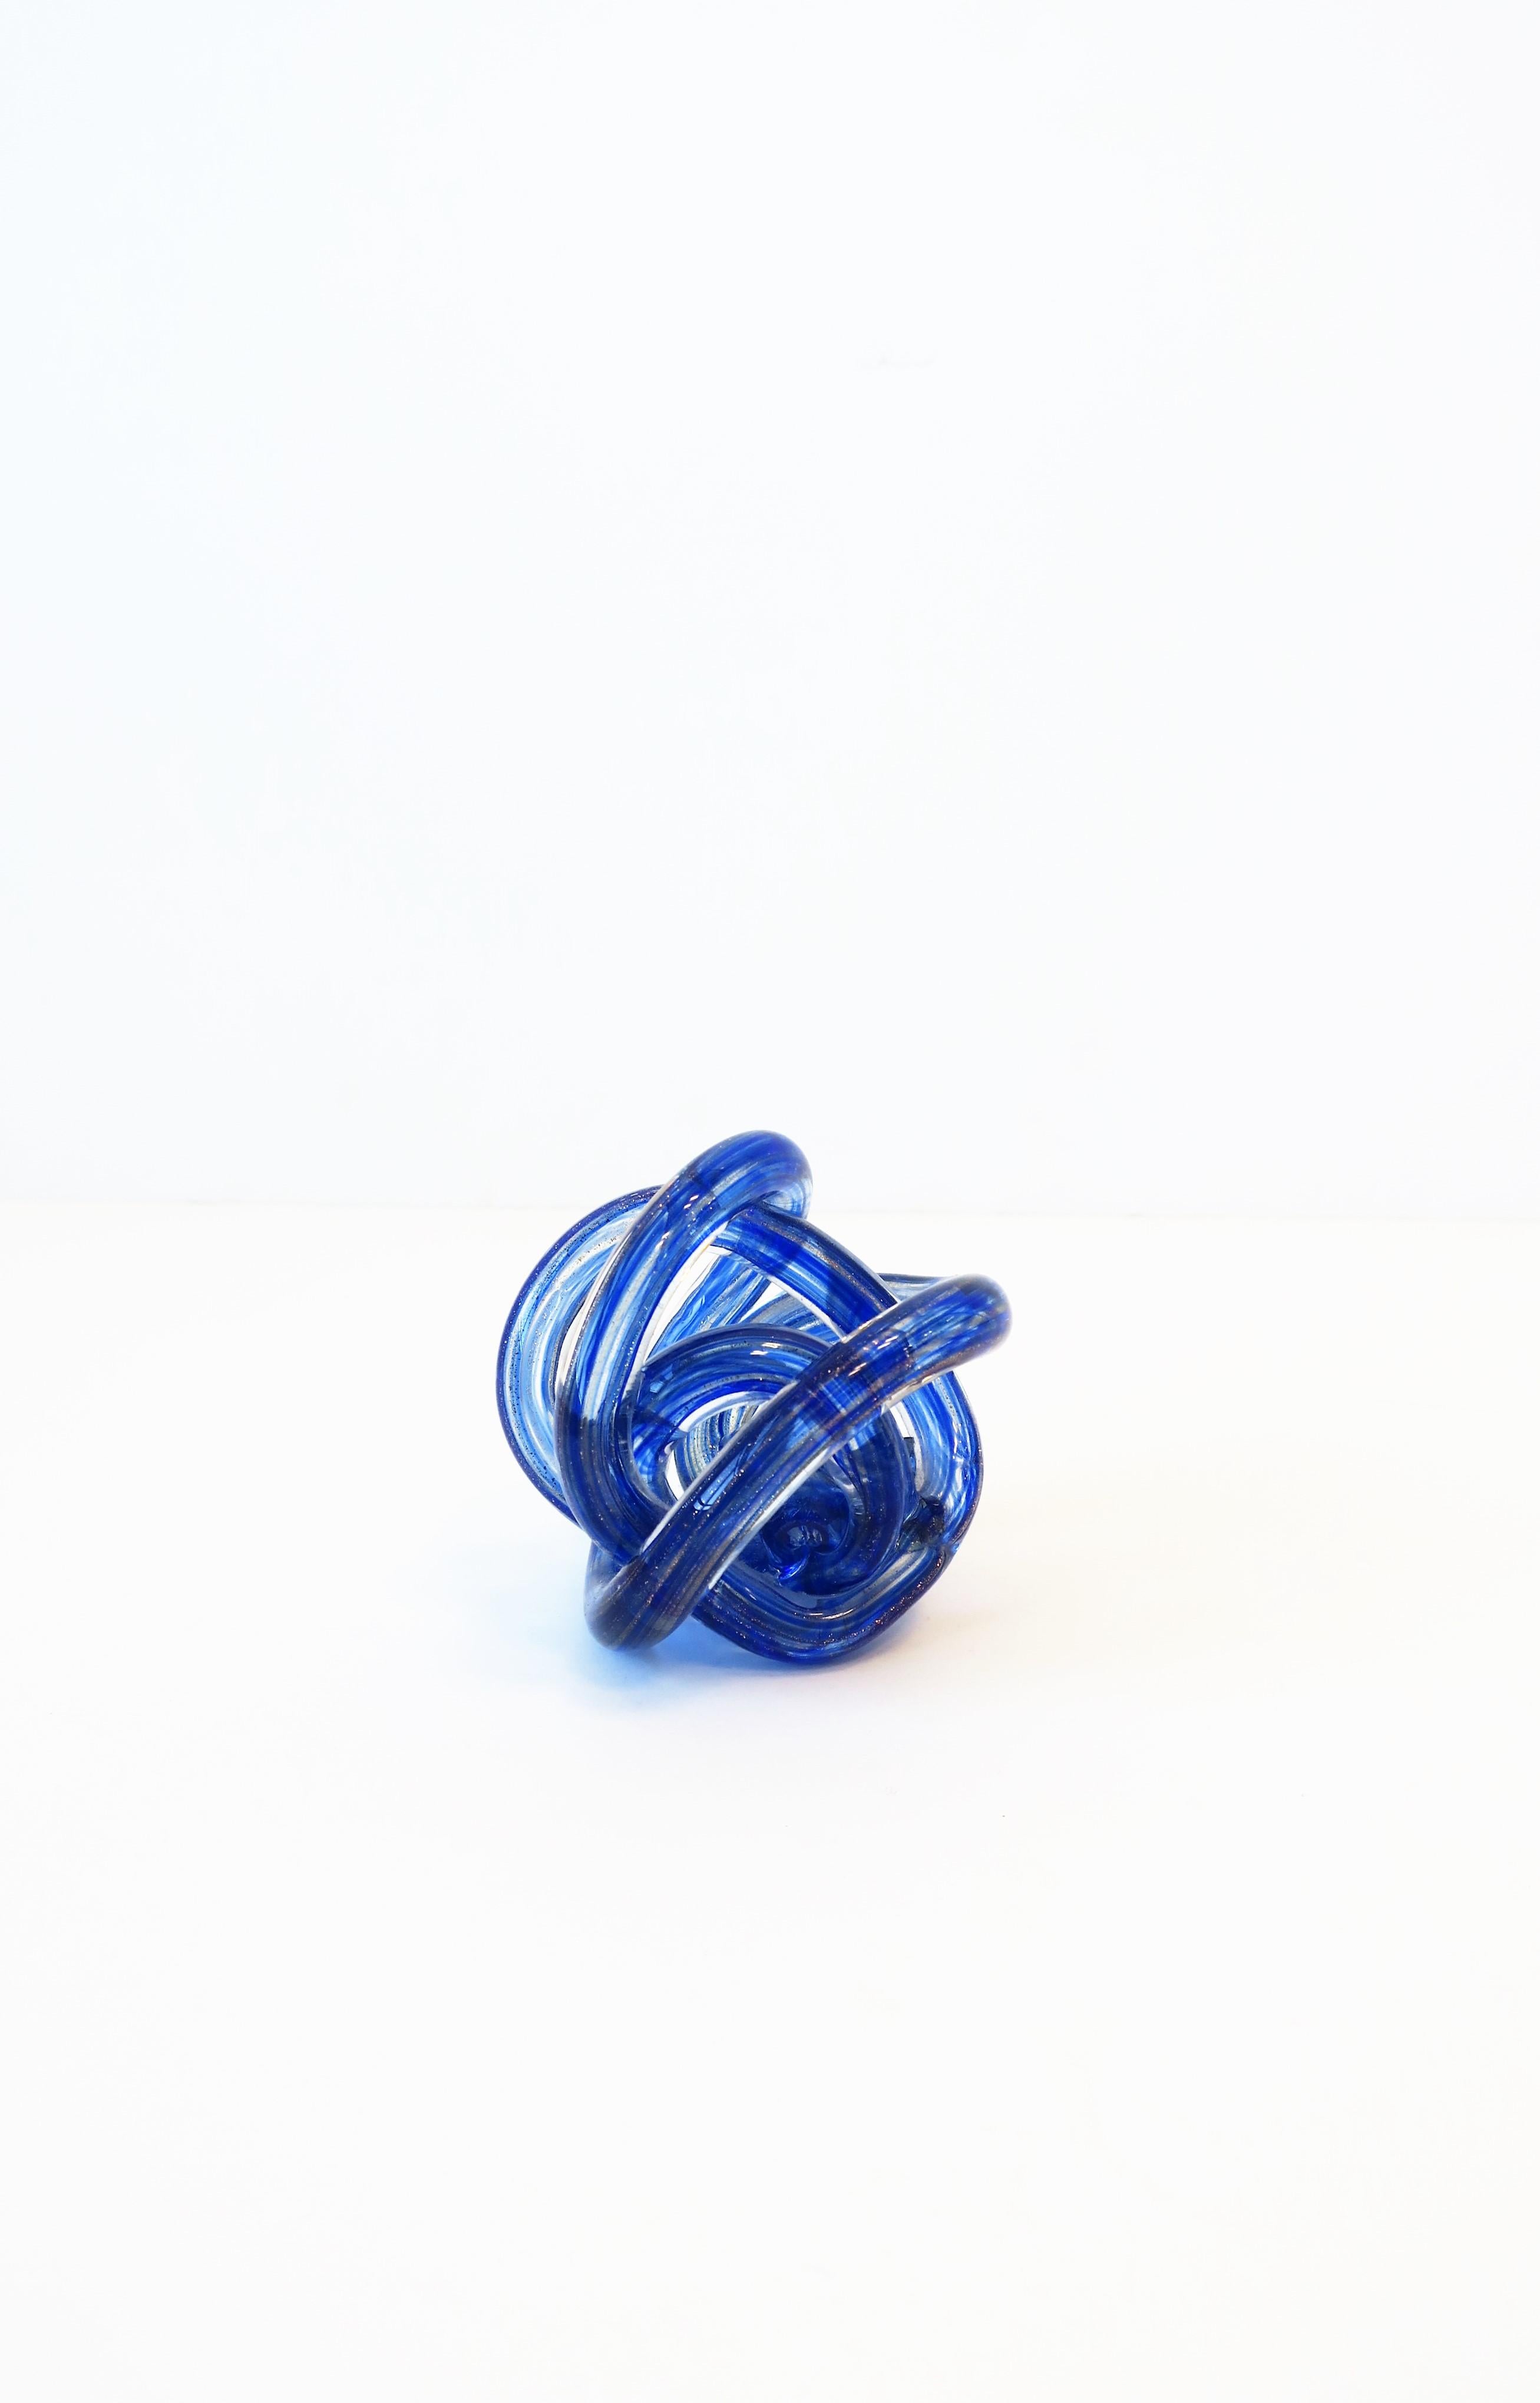 blue glass knot